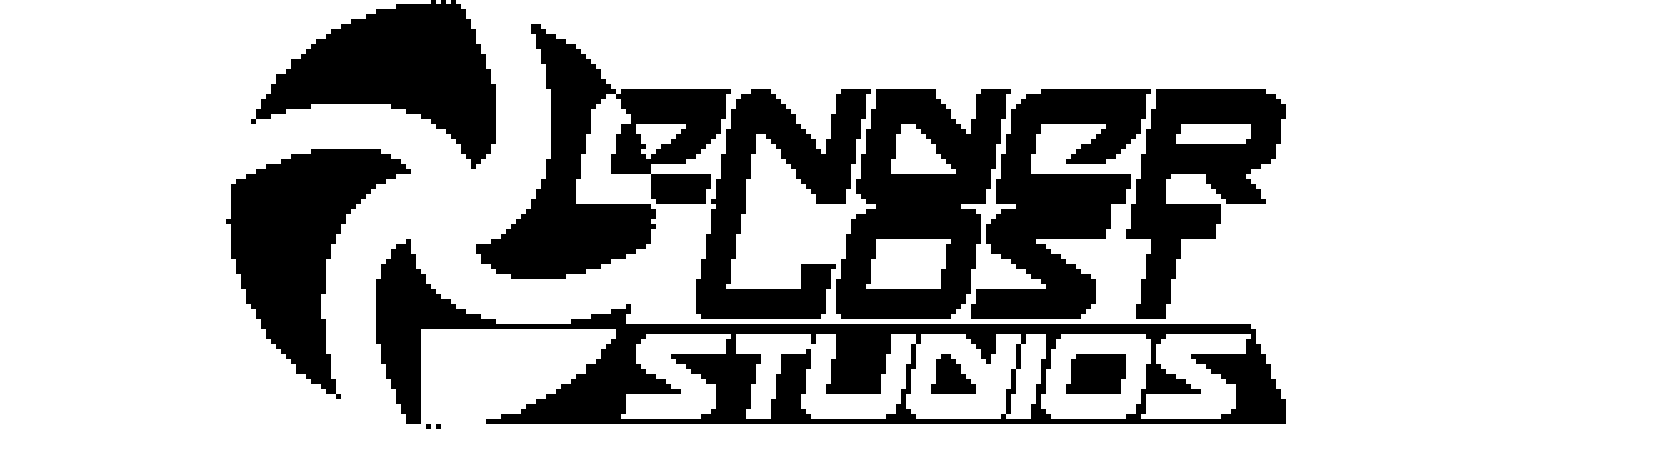 EnderLost Studios - Logo.png